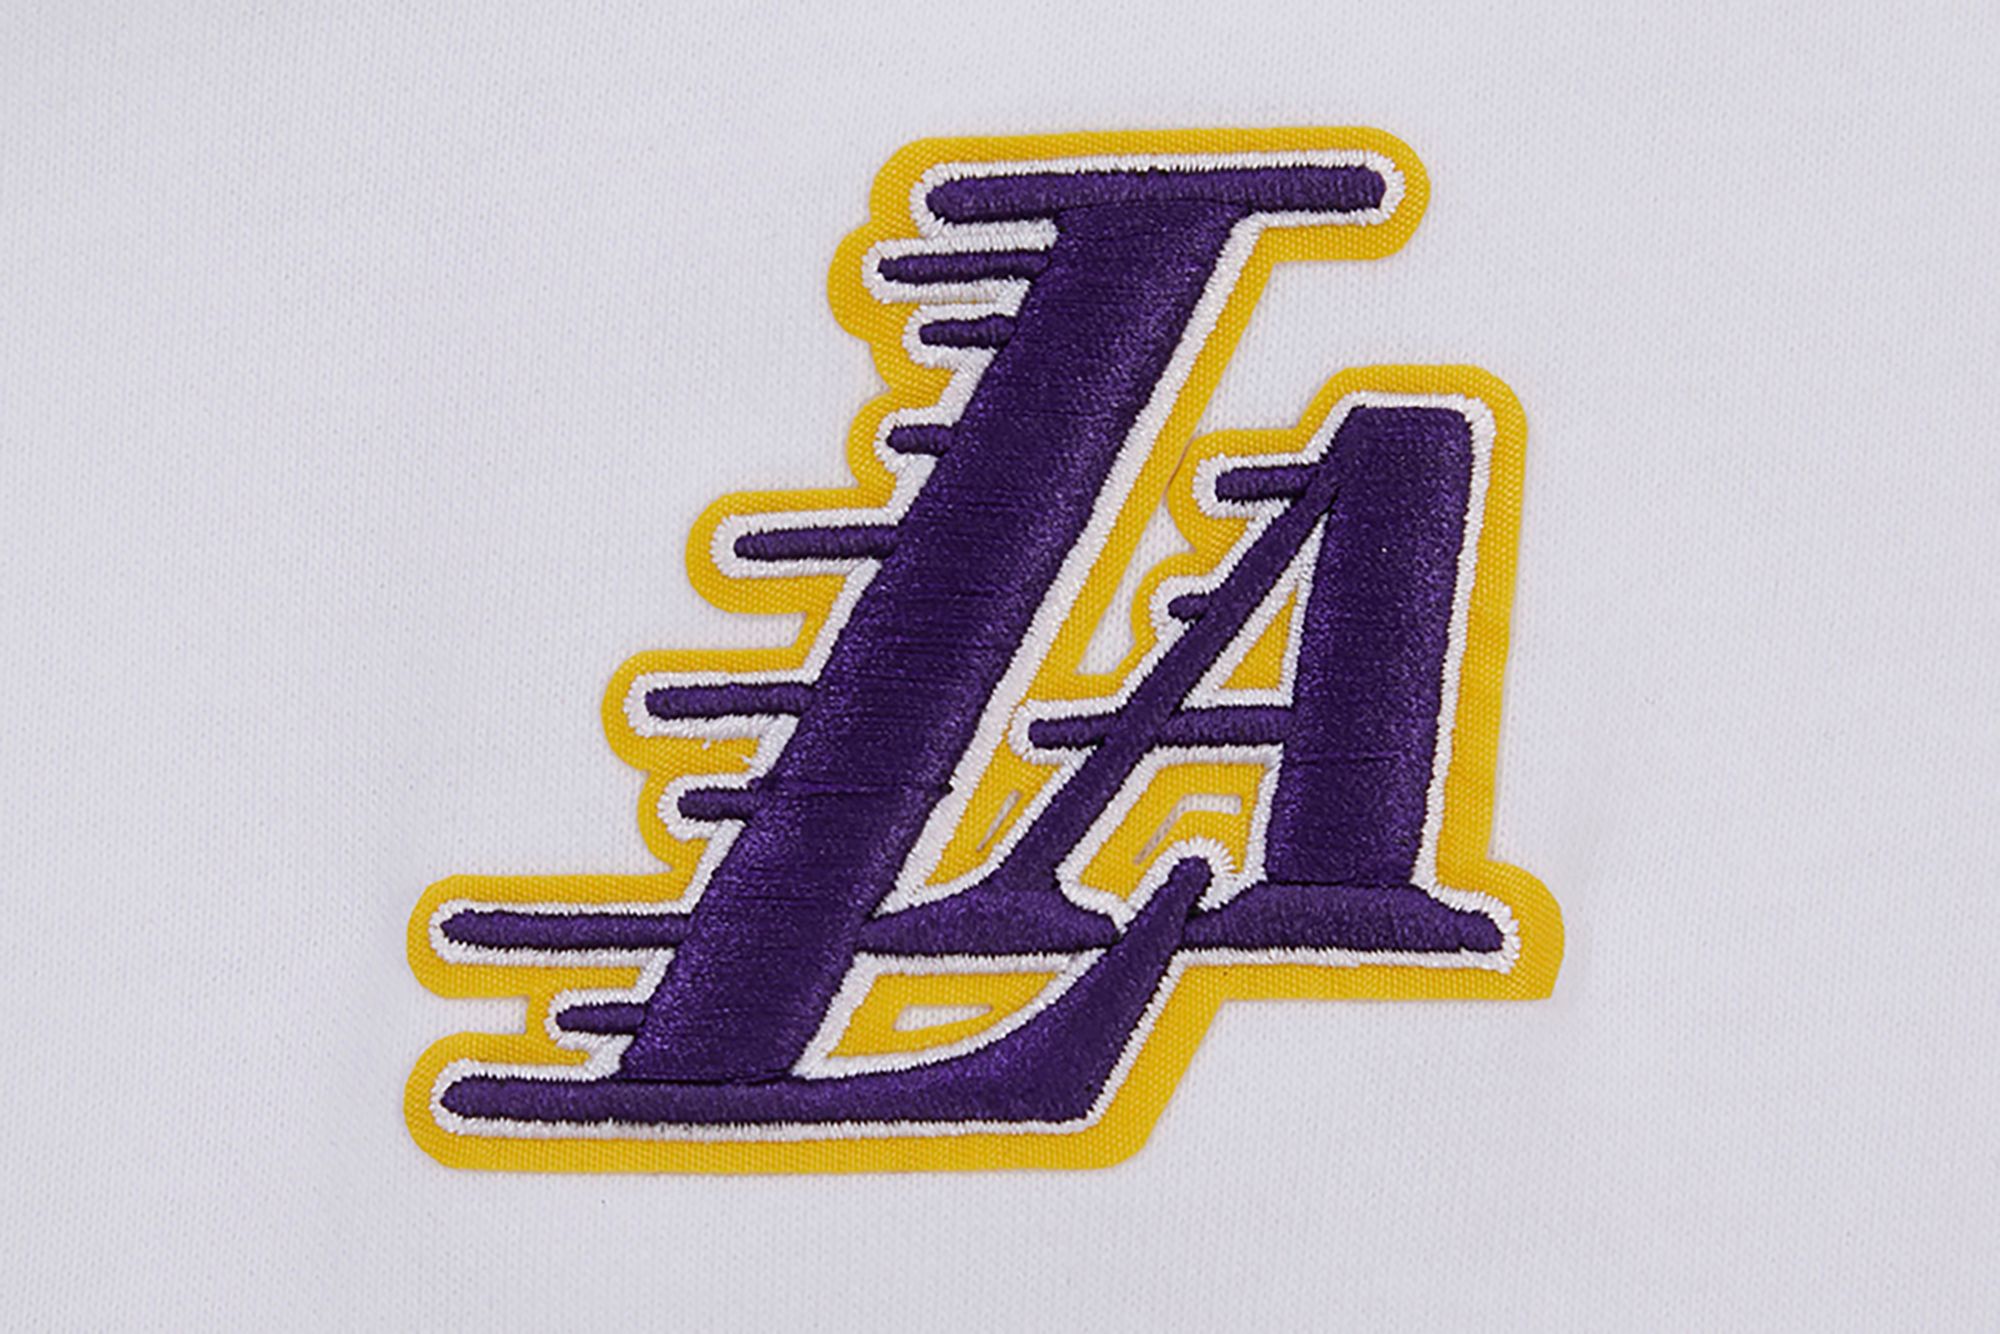 Pro Standard Women's Los Angeles Lakers Fleece Crewneck Sweater